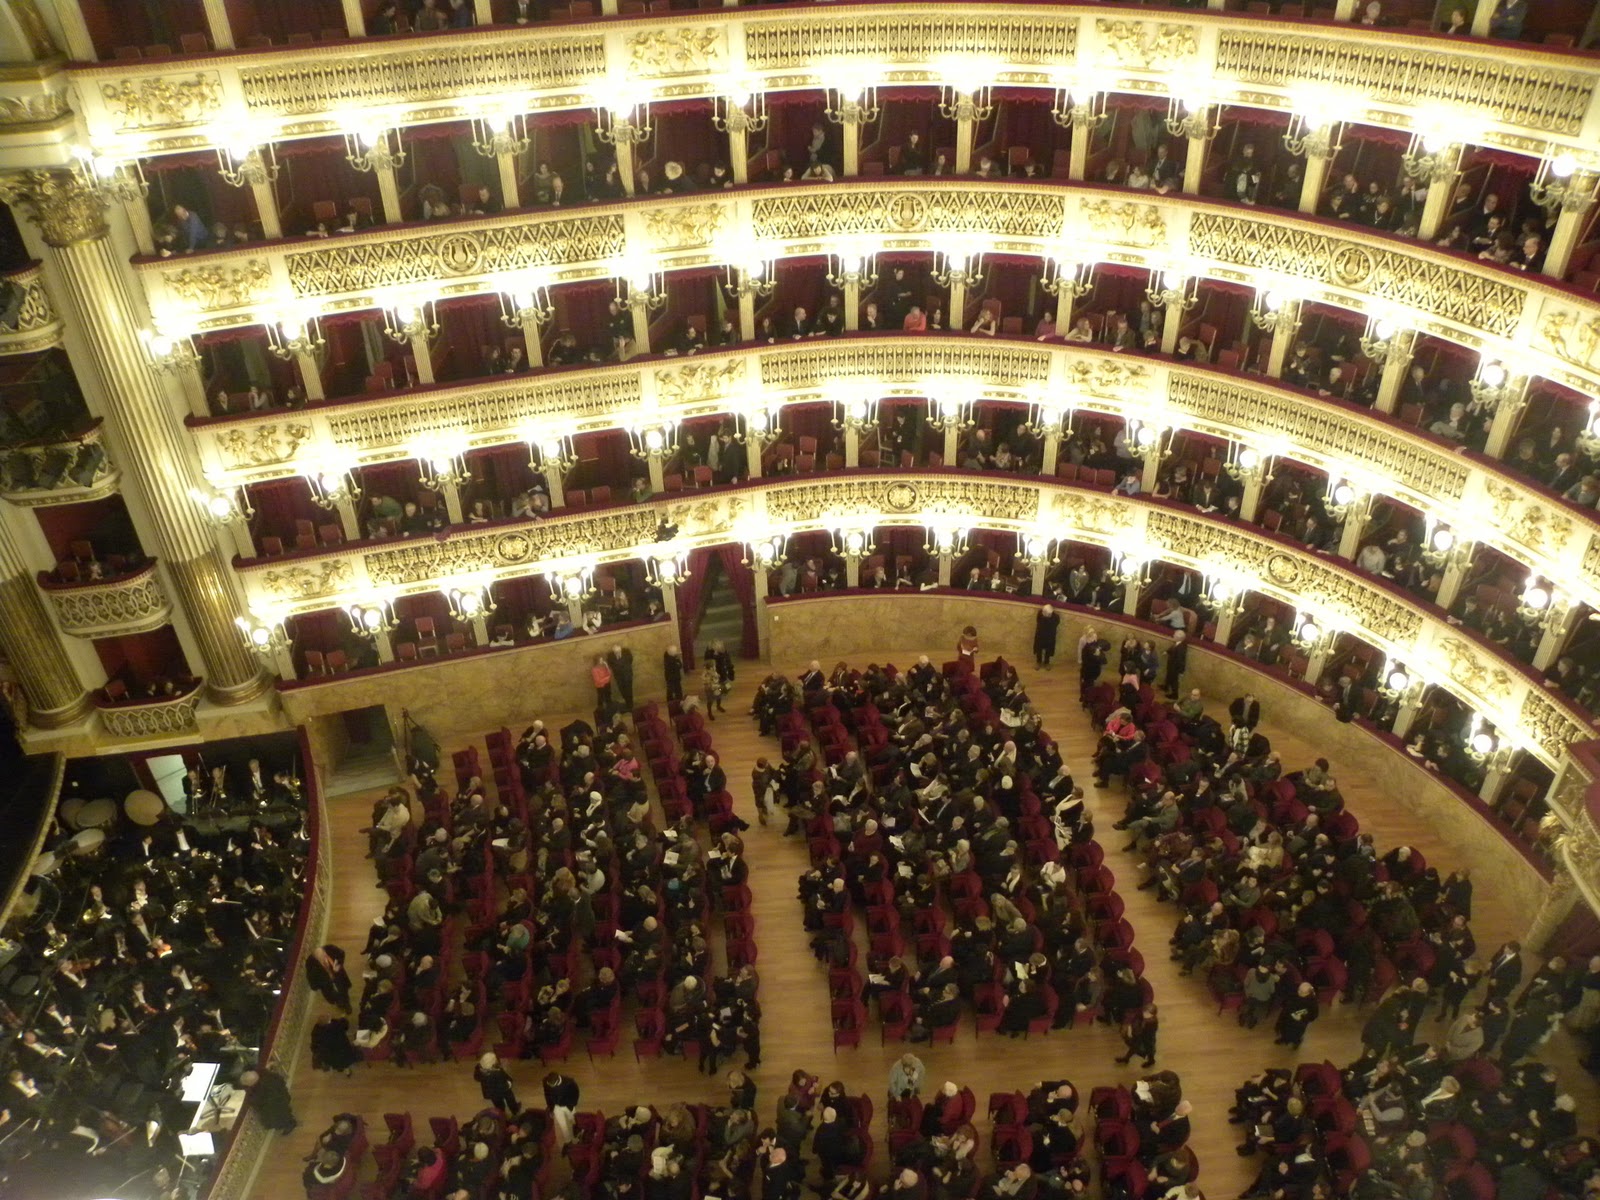 Teatro San Carlo Seating Chart